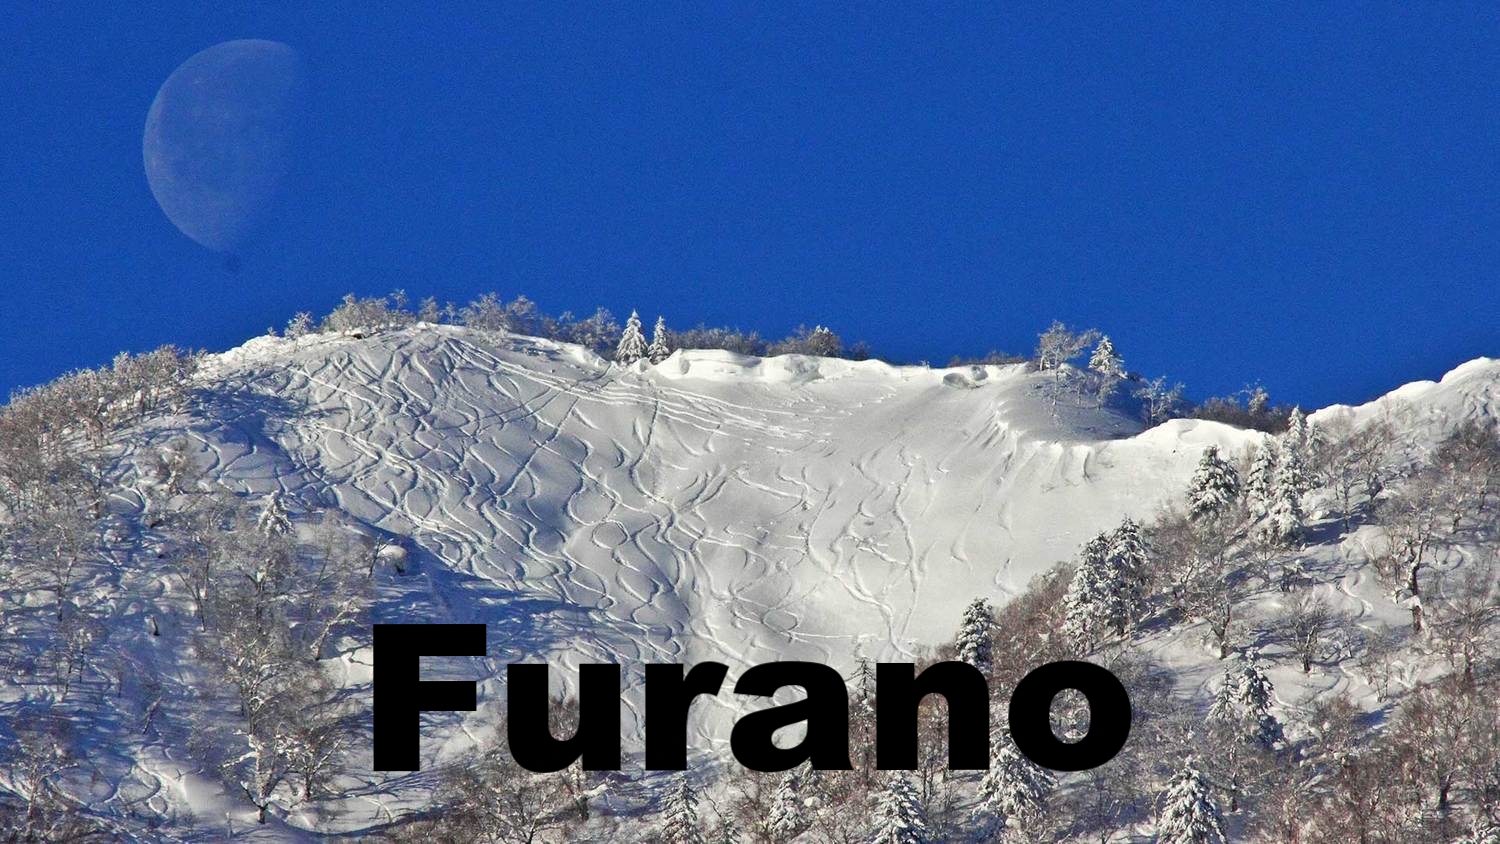 moon-over-furano.jpg